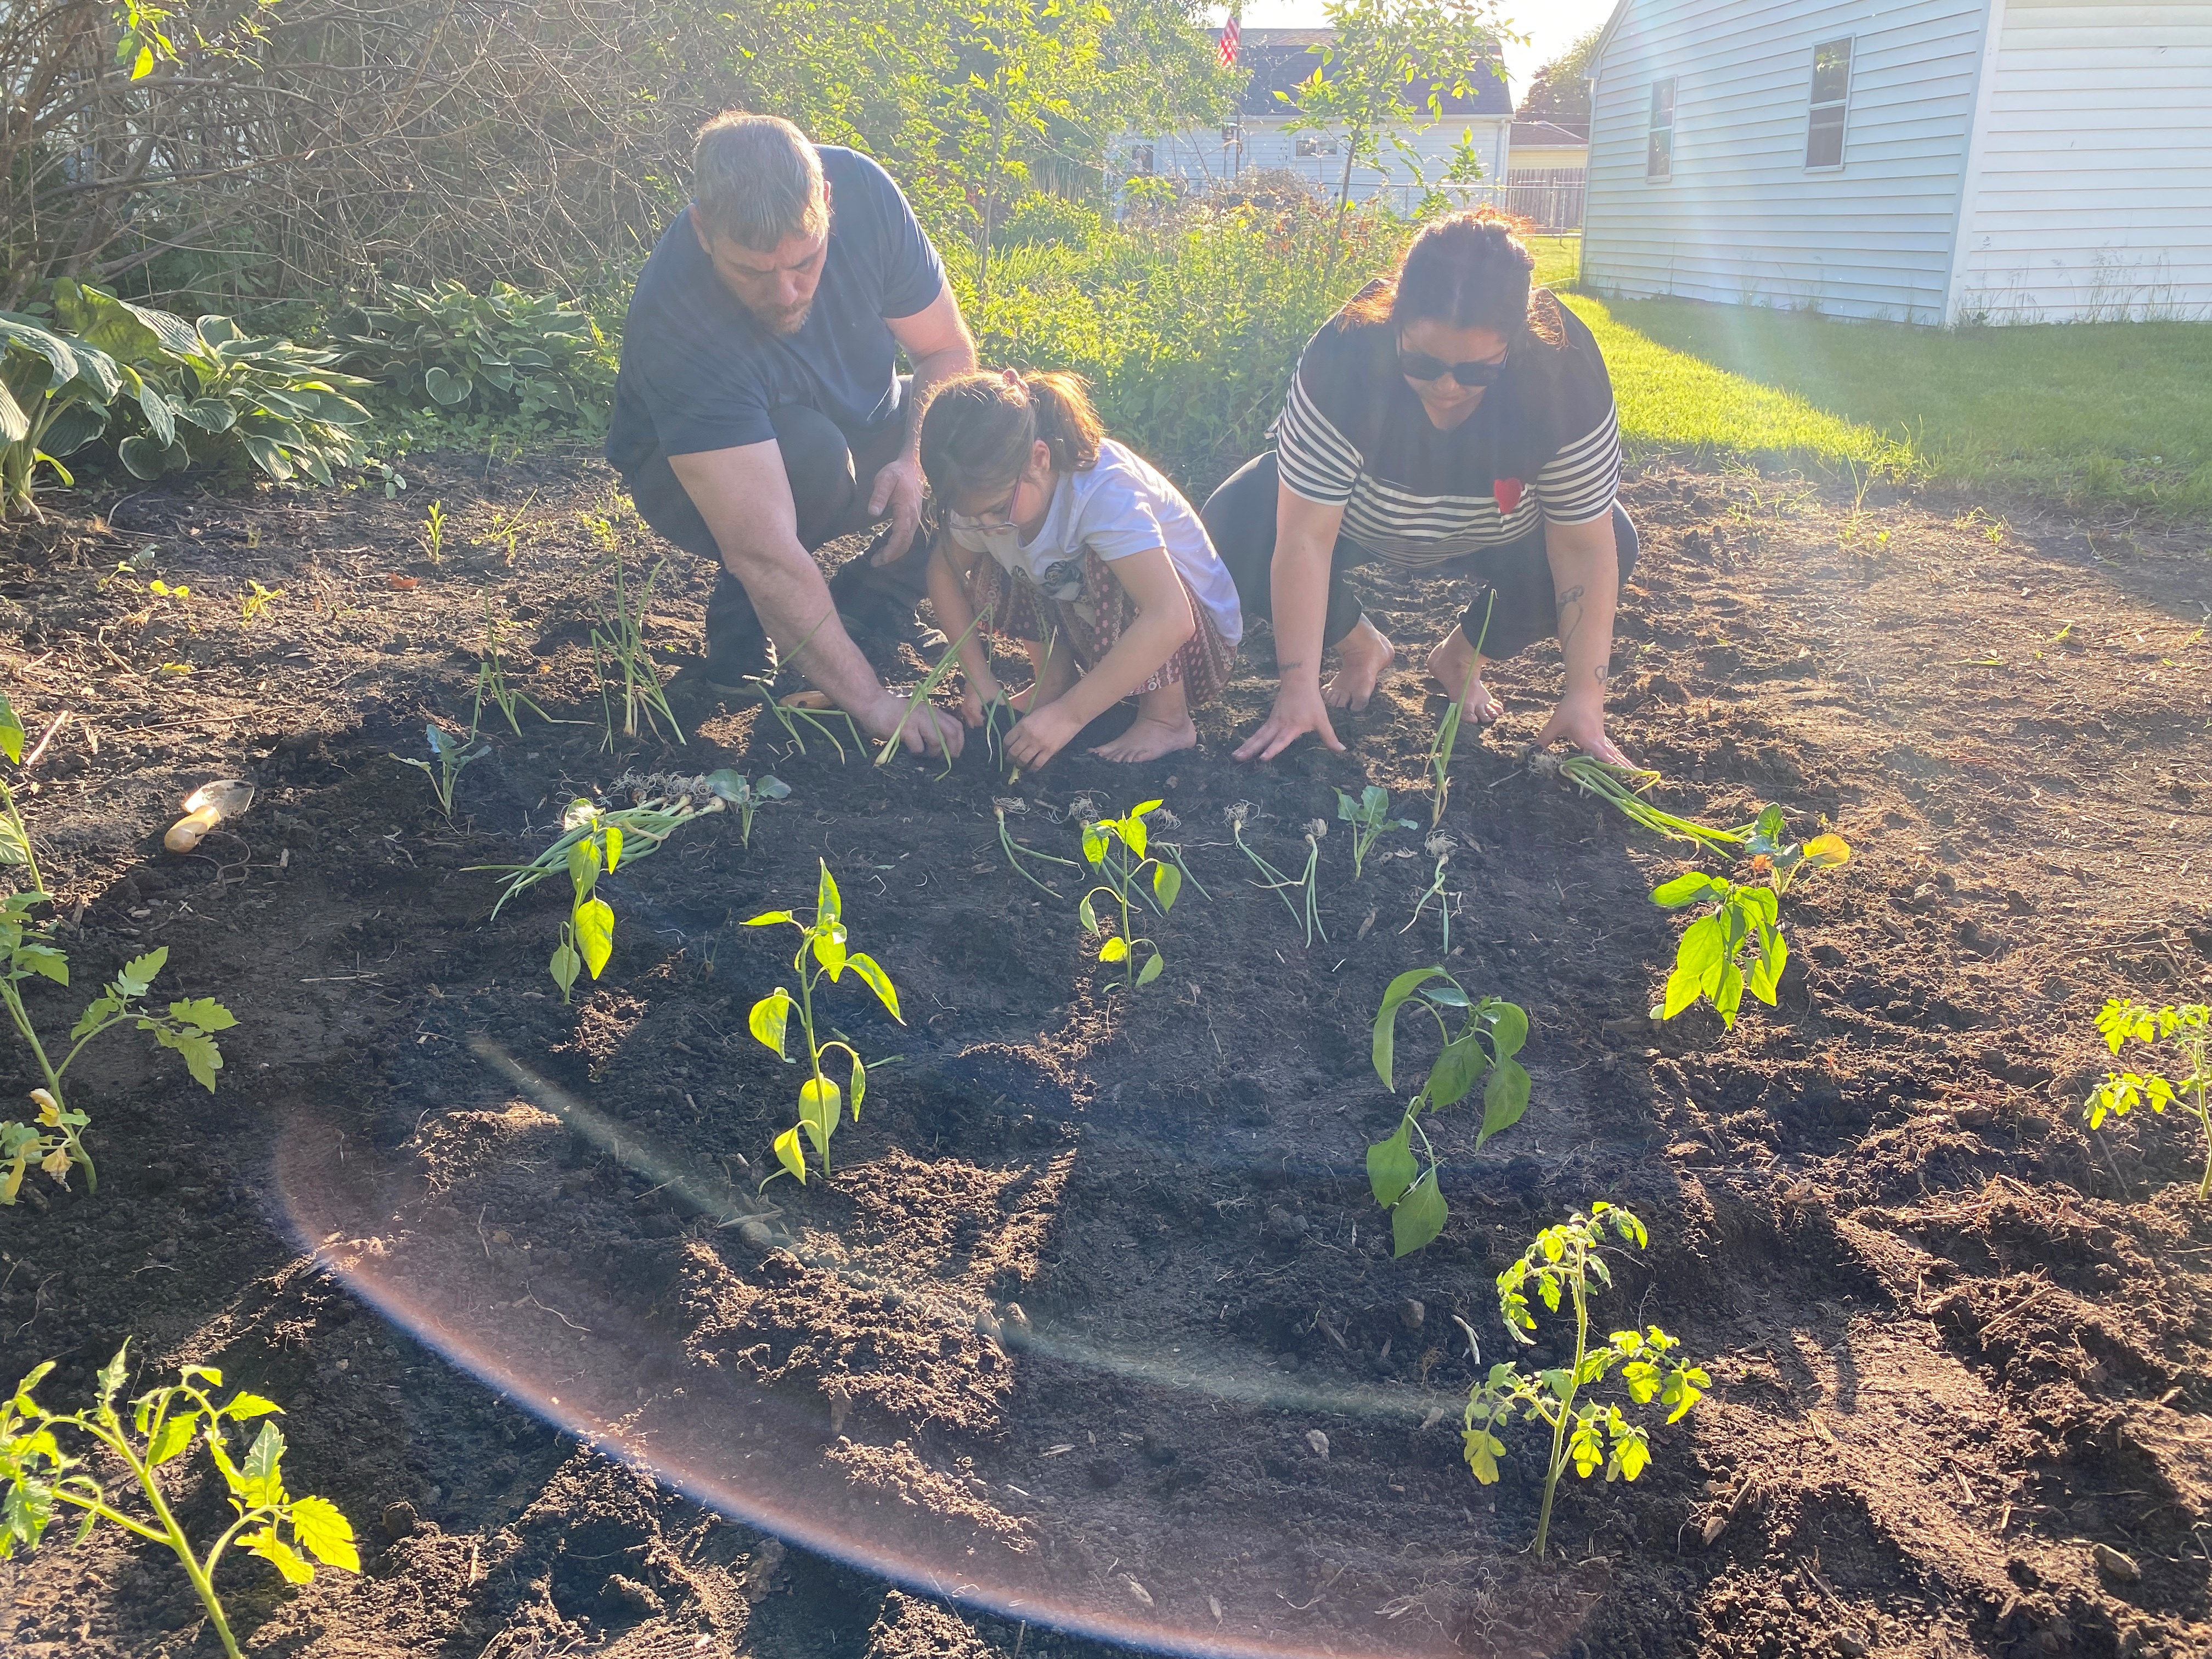 Family starting a new garden in their backyard